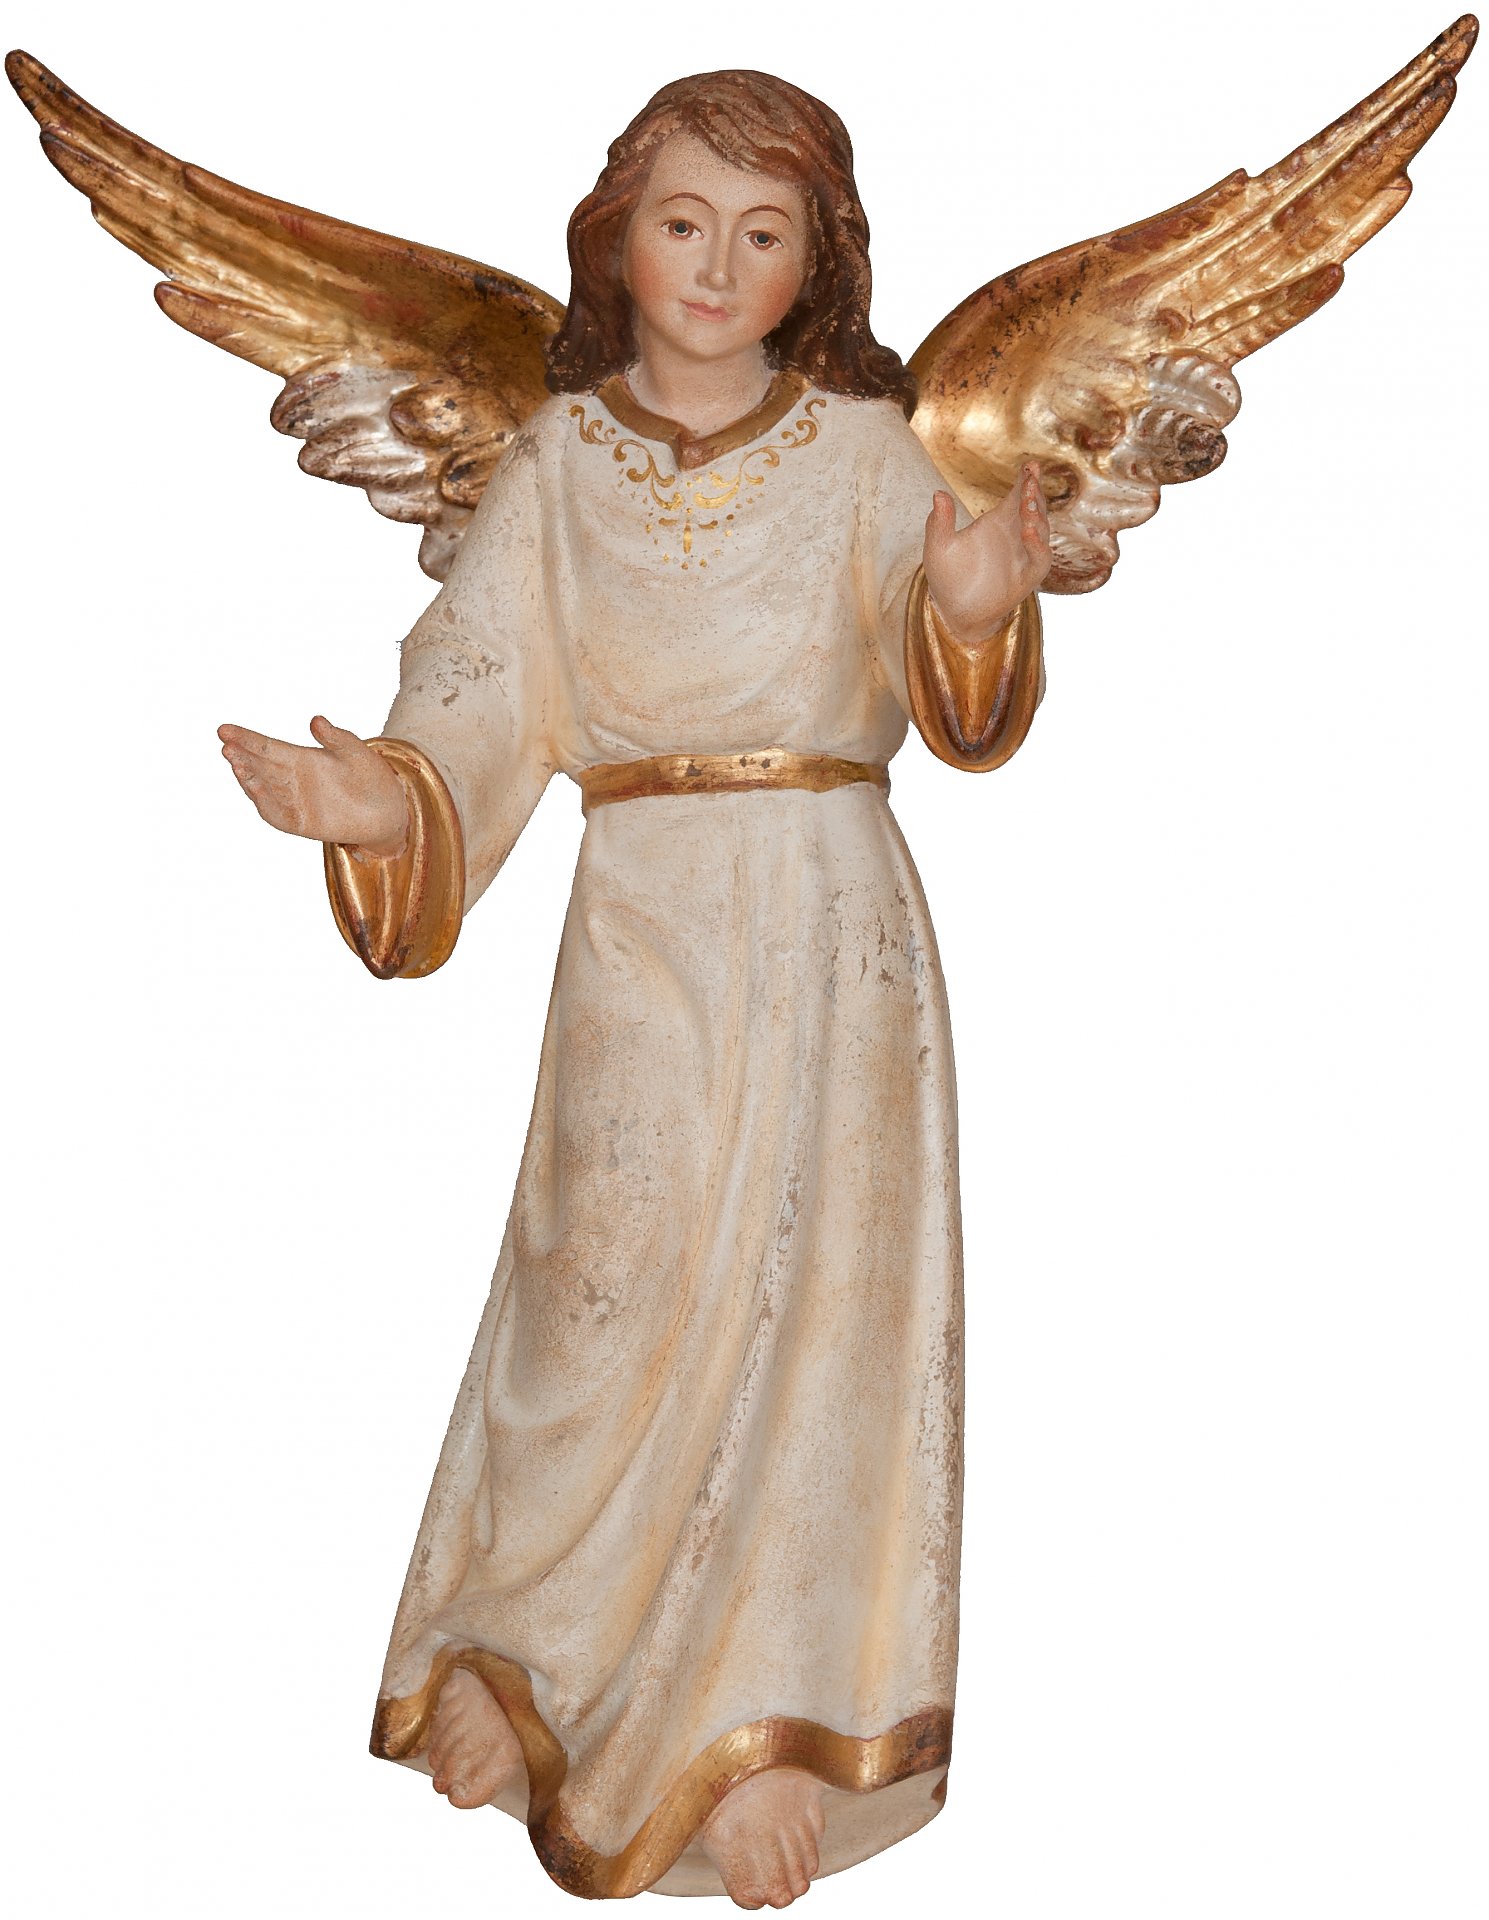 Portachiavi con angelo custode in legno - Salcher